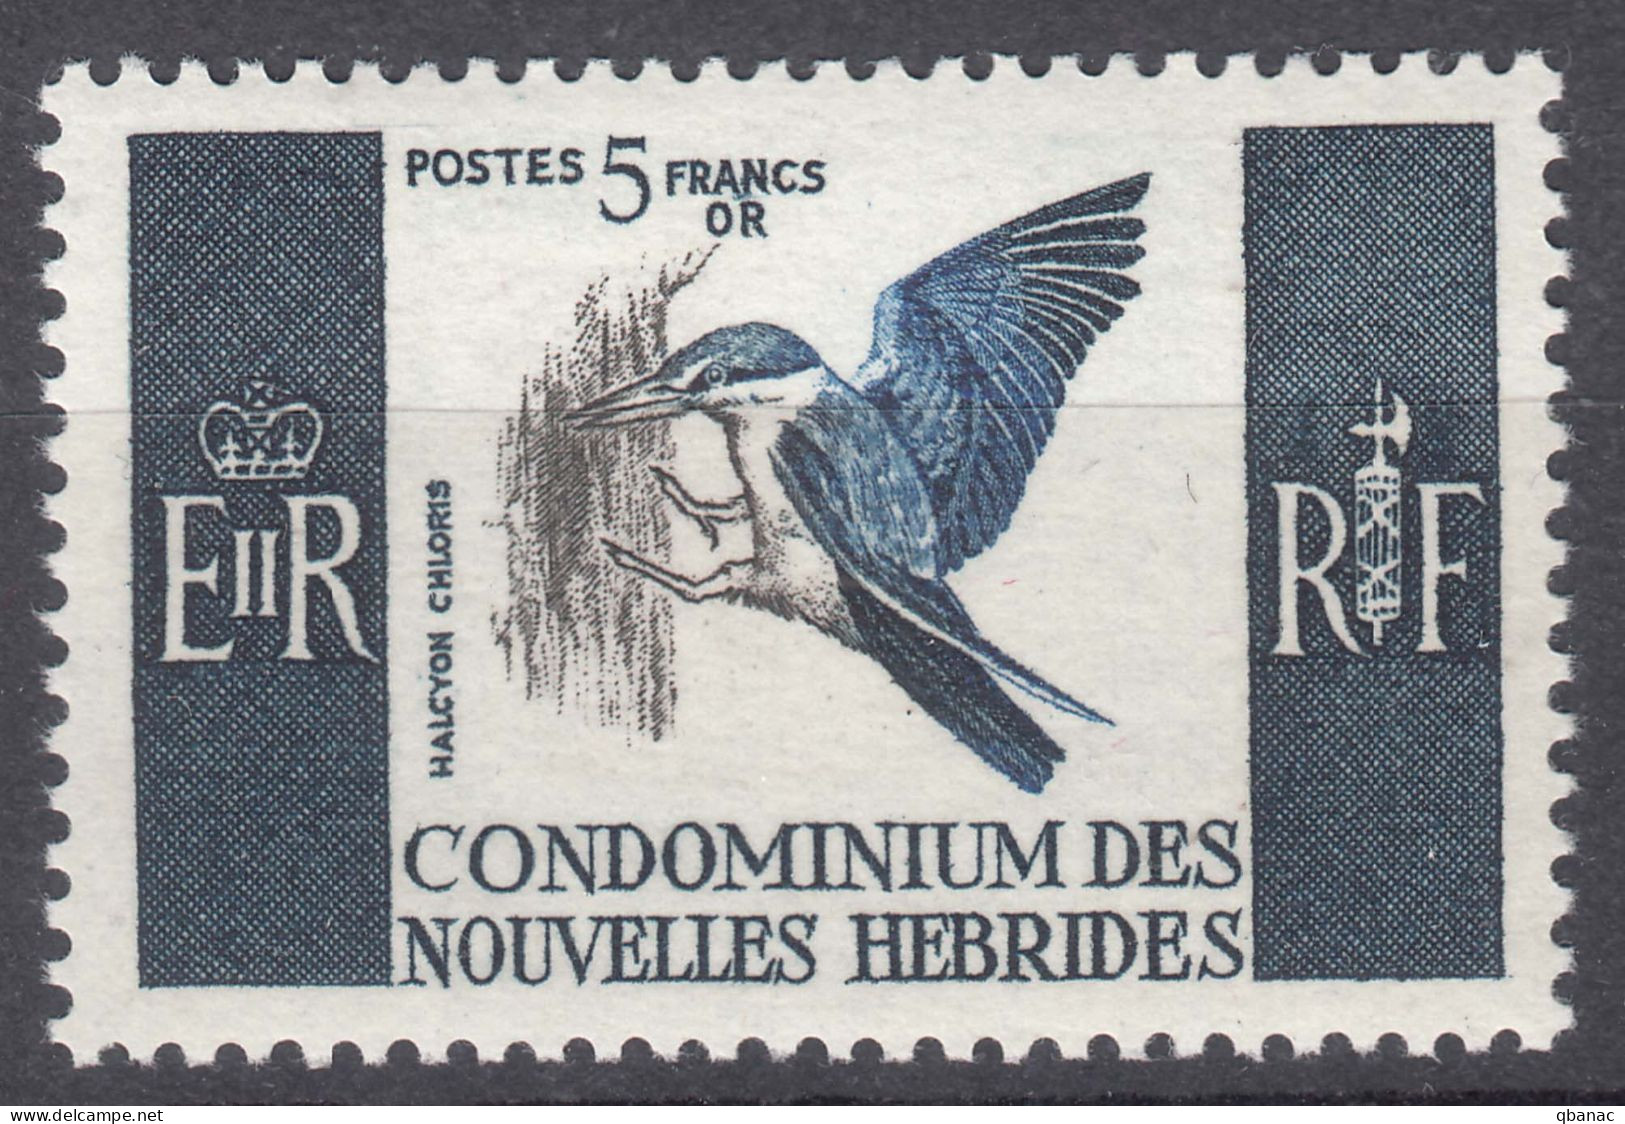 New Hebrides Nouvelles Hebrides French Legend 1966 Birds Mi#243 Mint Never Hinged (sans Charniere) - Ungebraucht